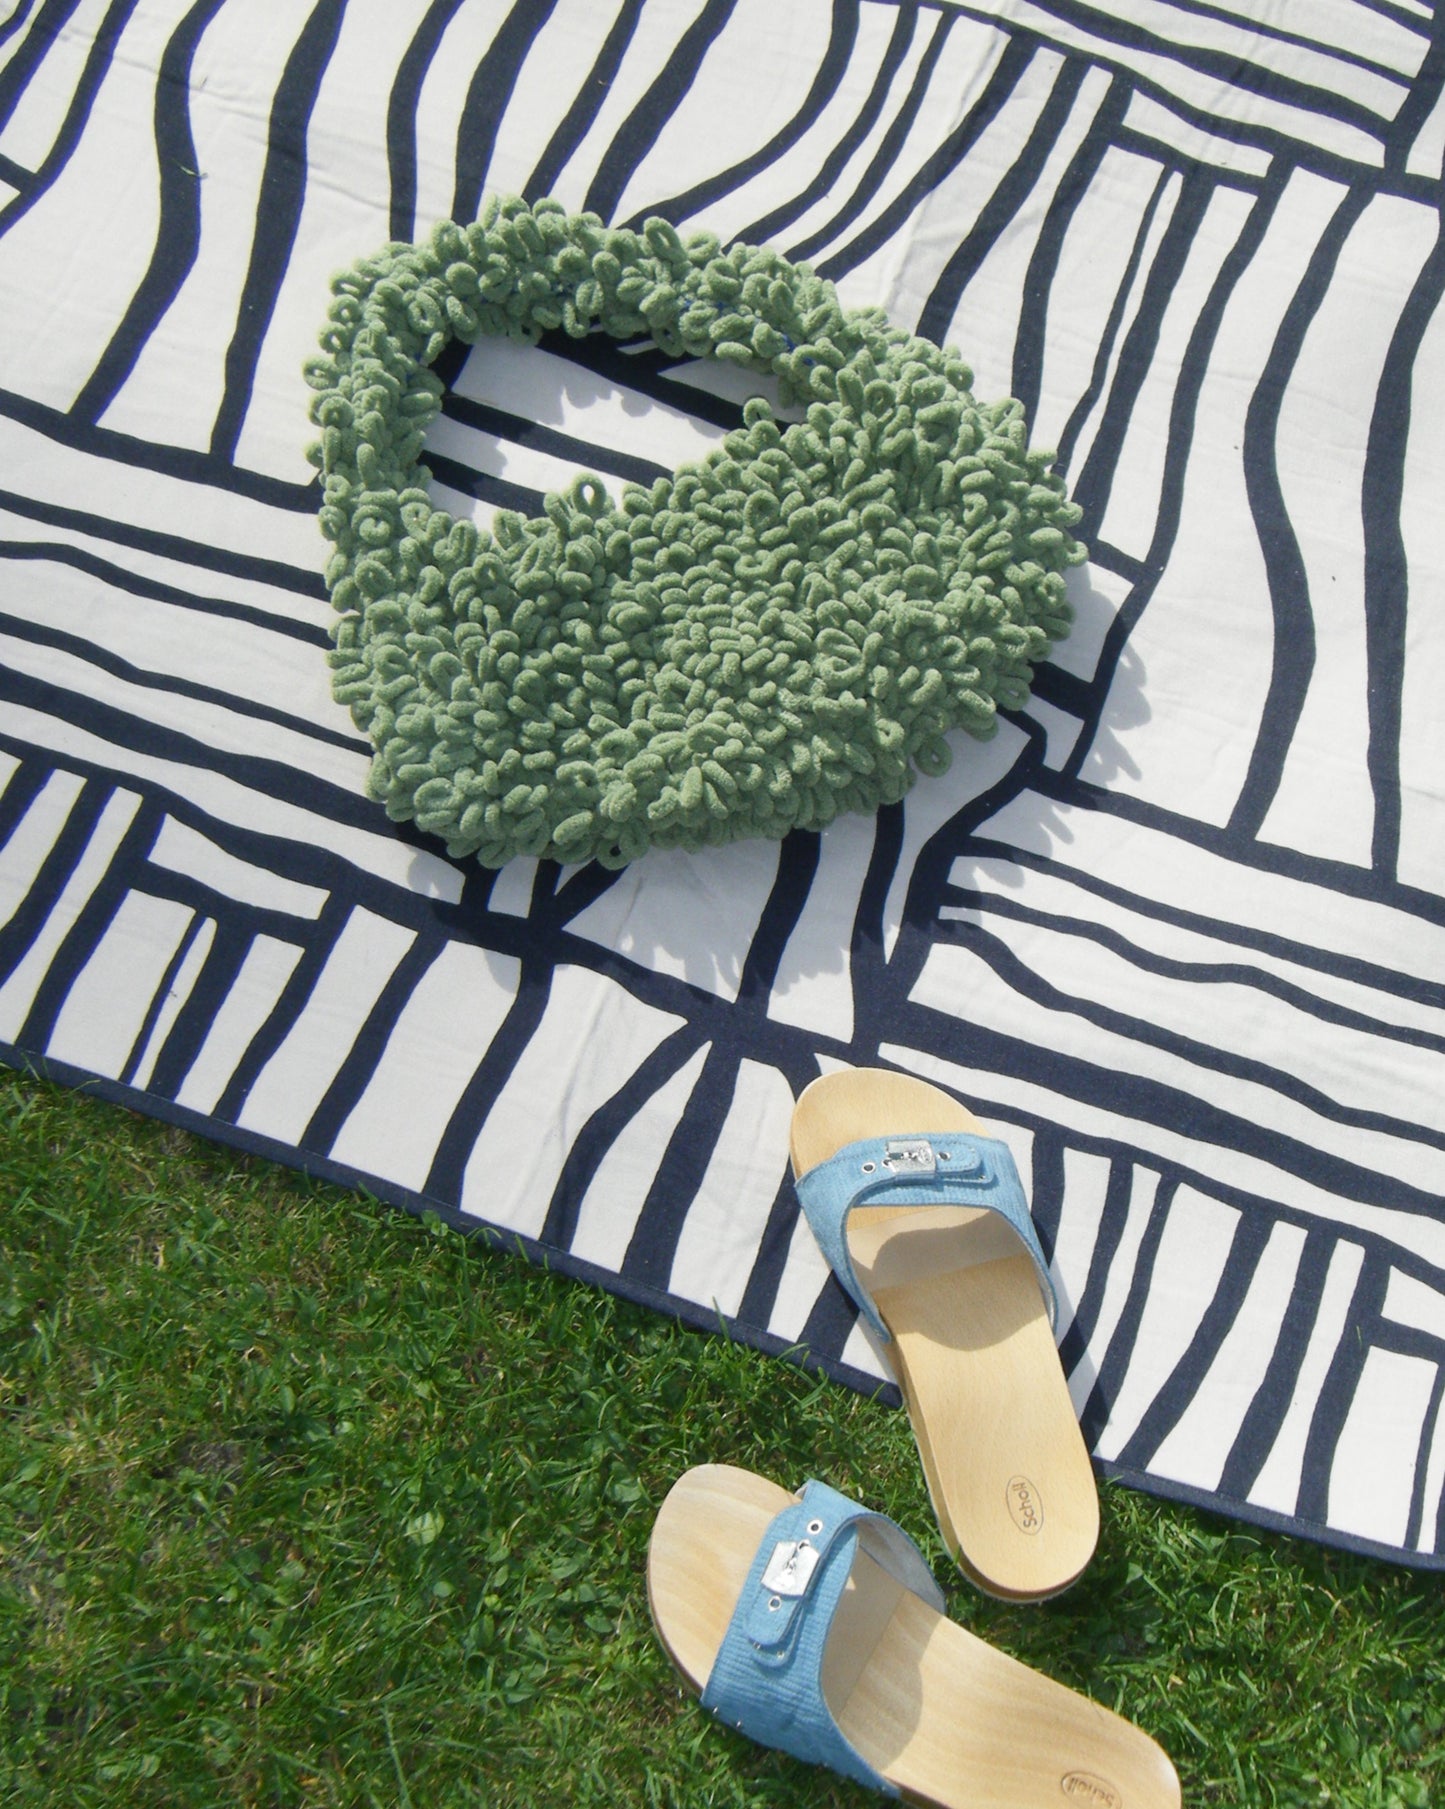 Curlz Bag Charcoal - Medium - Handmade Crochet Bag